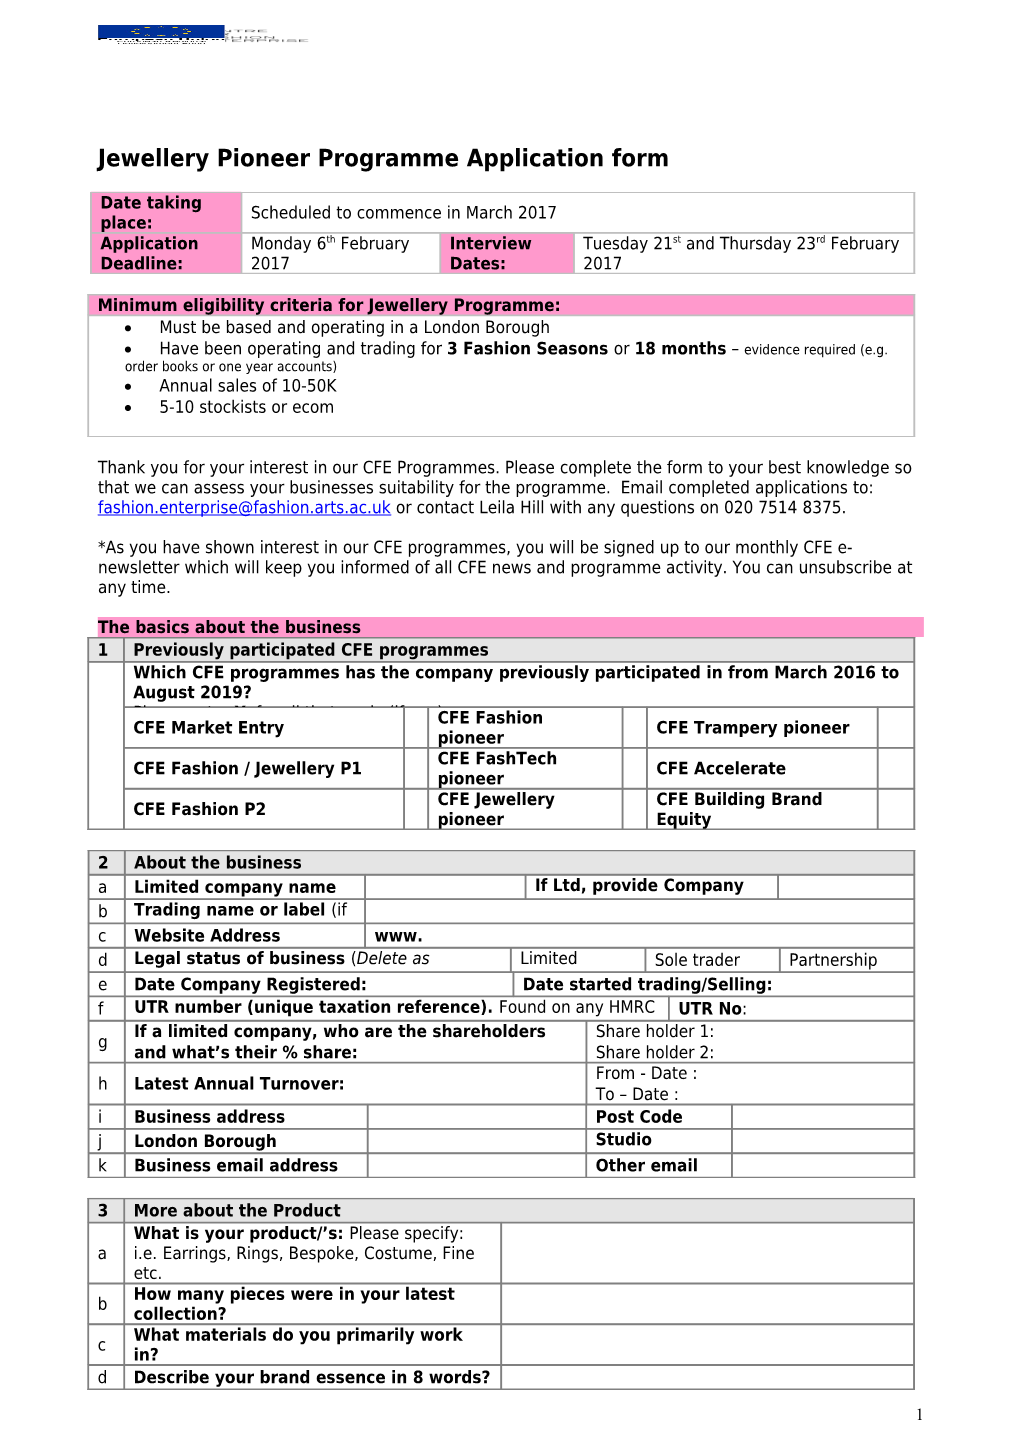 Jewellery Pioneer Programme Application Form